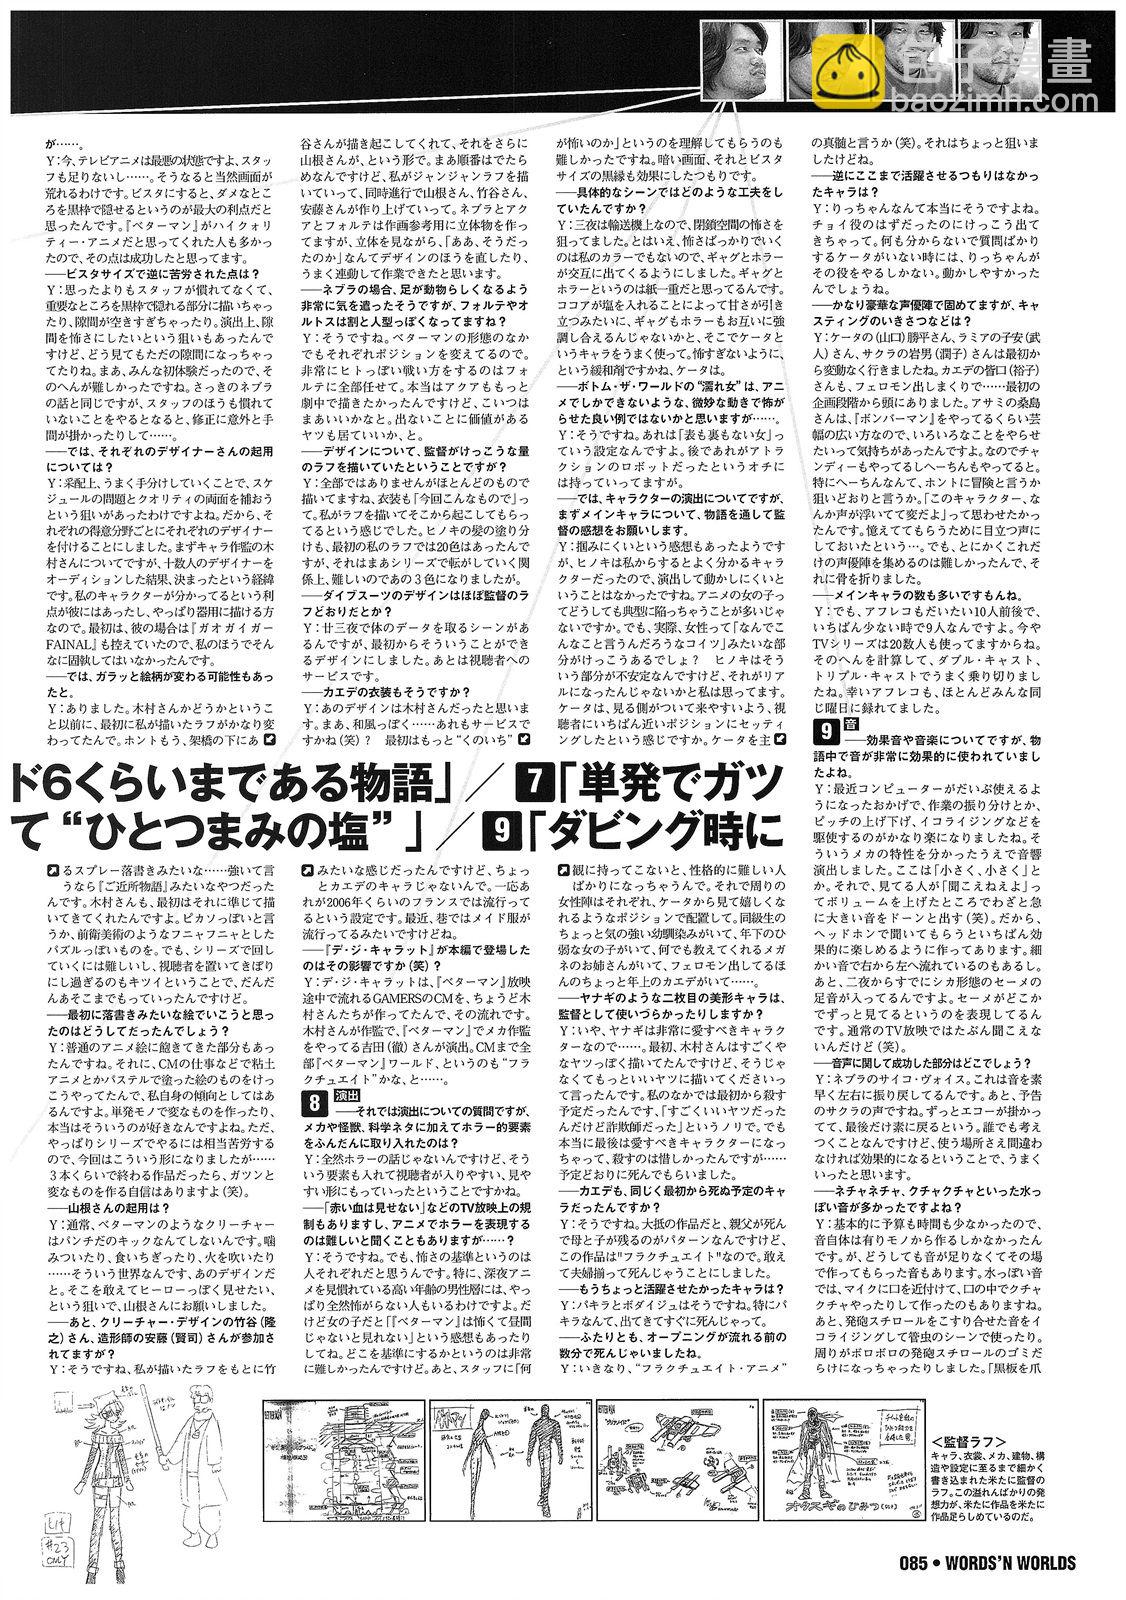 BETTERMAN COMPLETE BOOK 鑑-kagami- - 第02卷(2/3) - 7